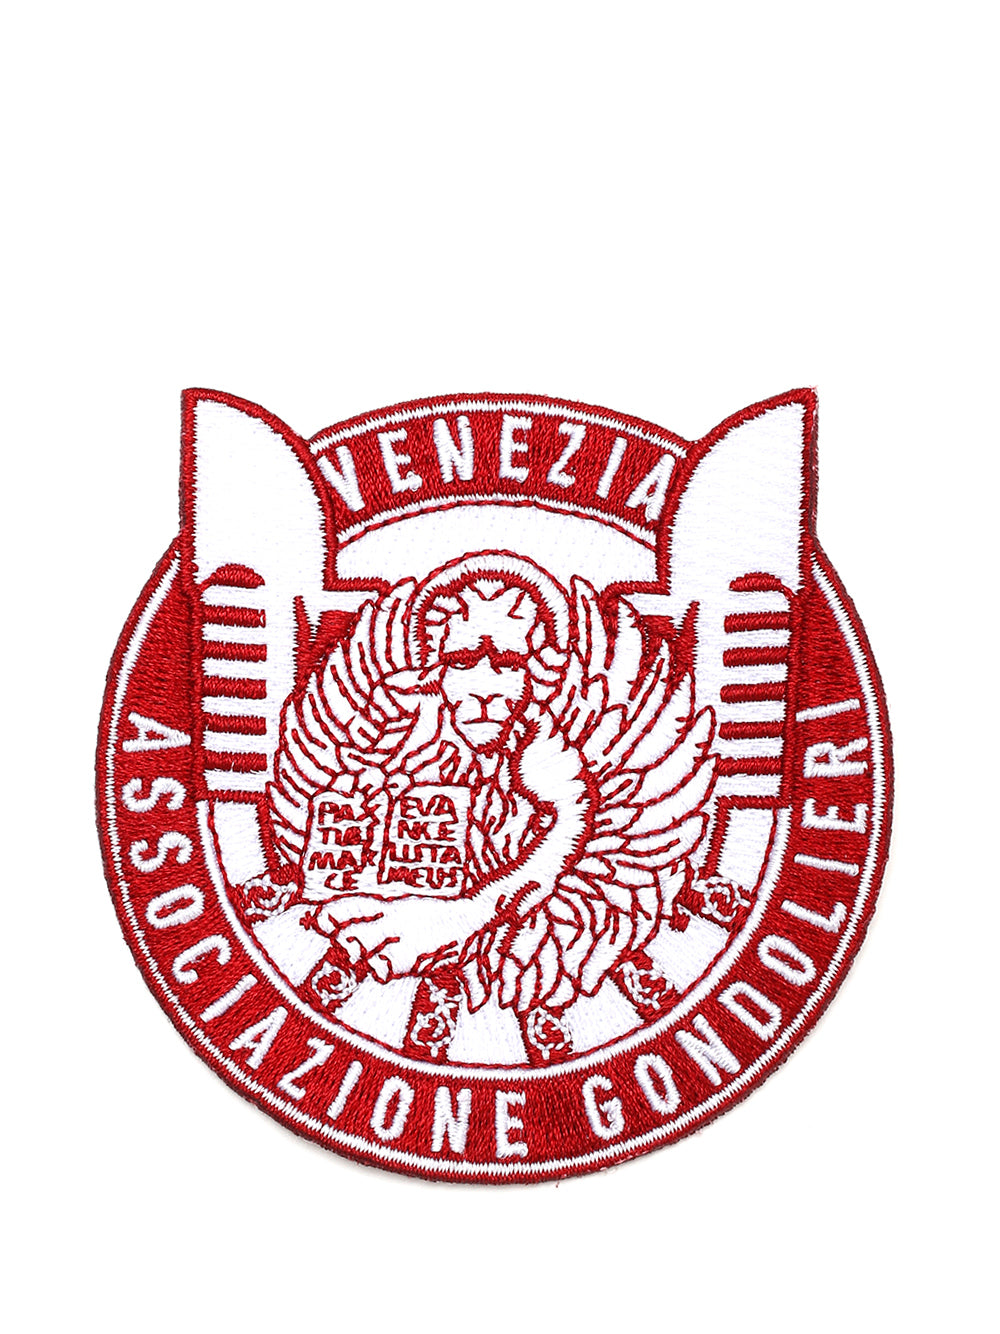 Toppa Associazione gondolieri Venezia